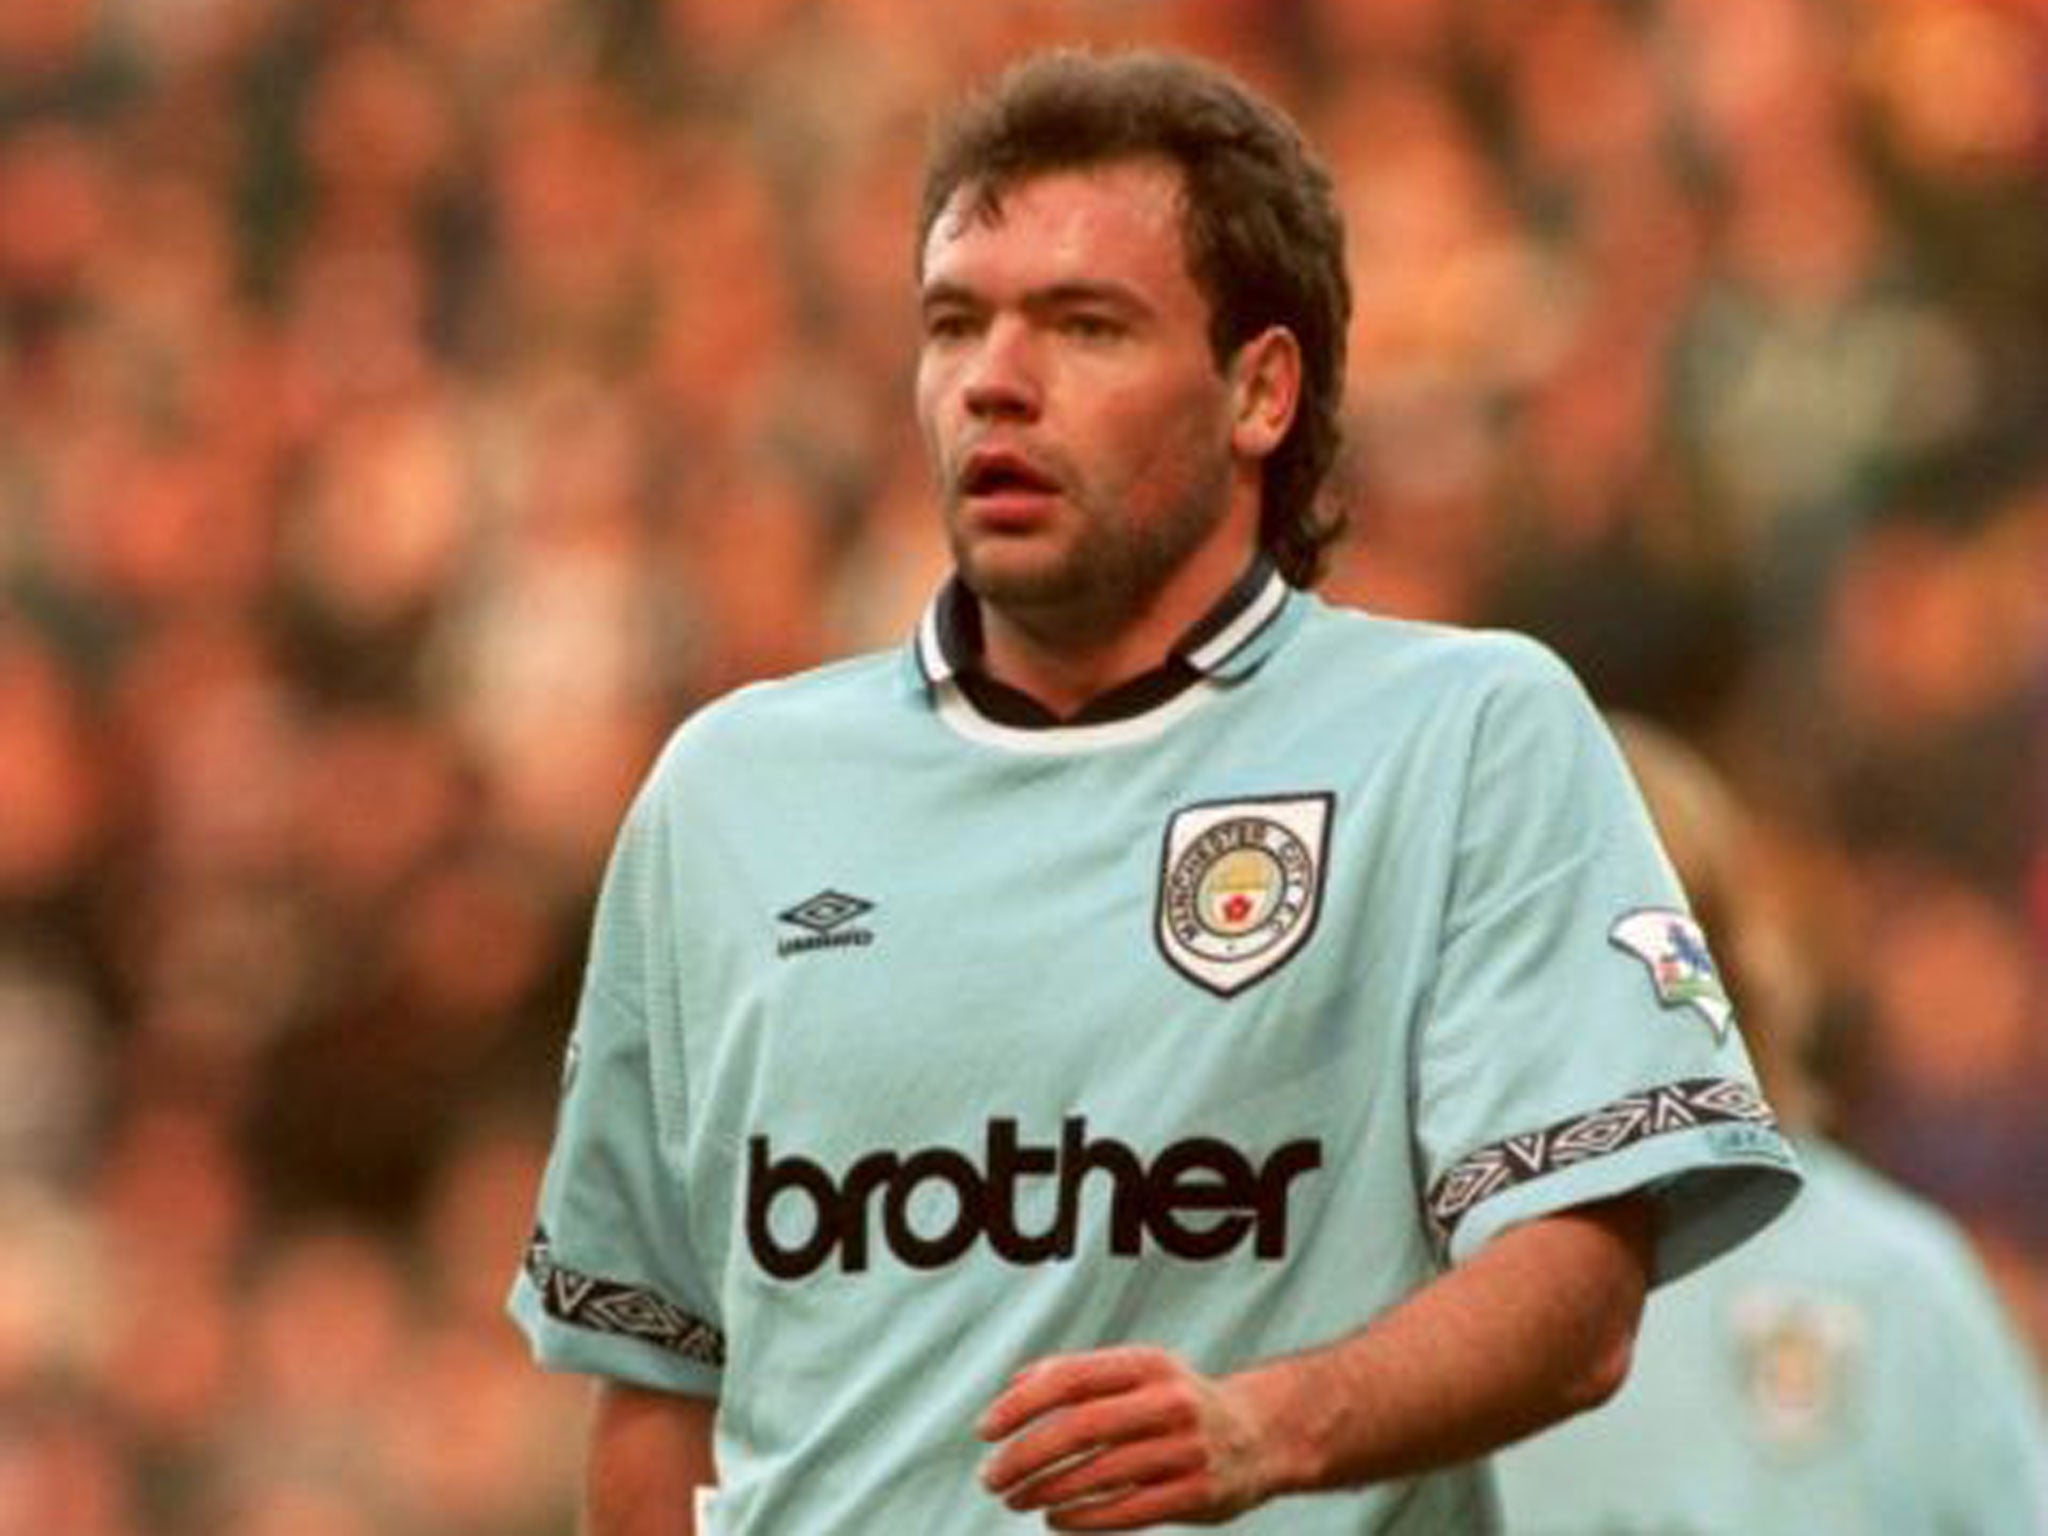 City slicker: Uwe Rösler in action for Manchester City in 1995